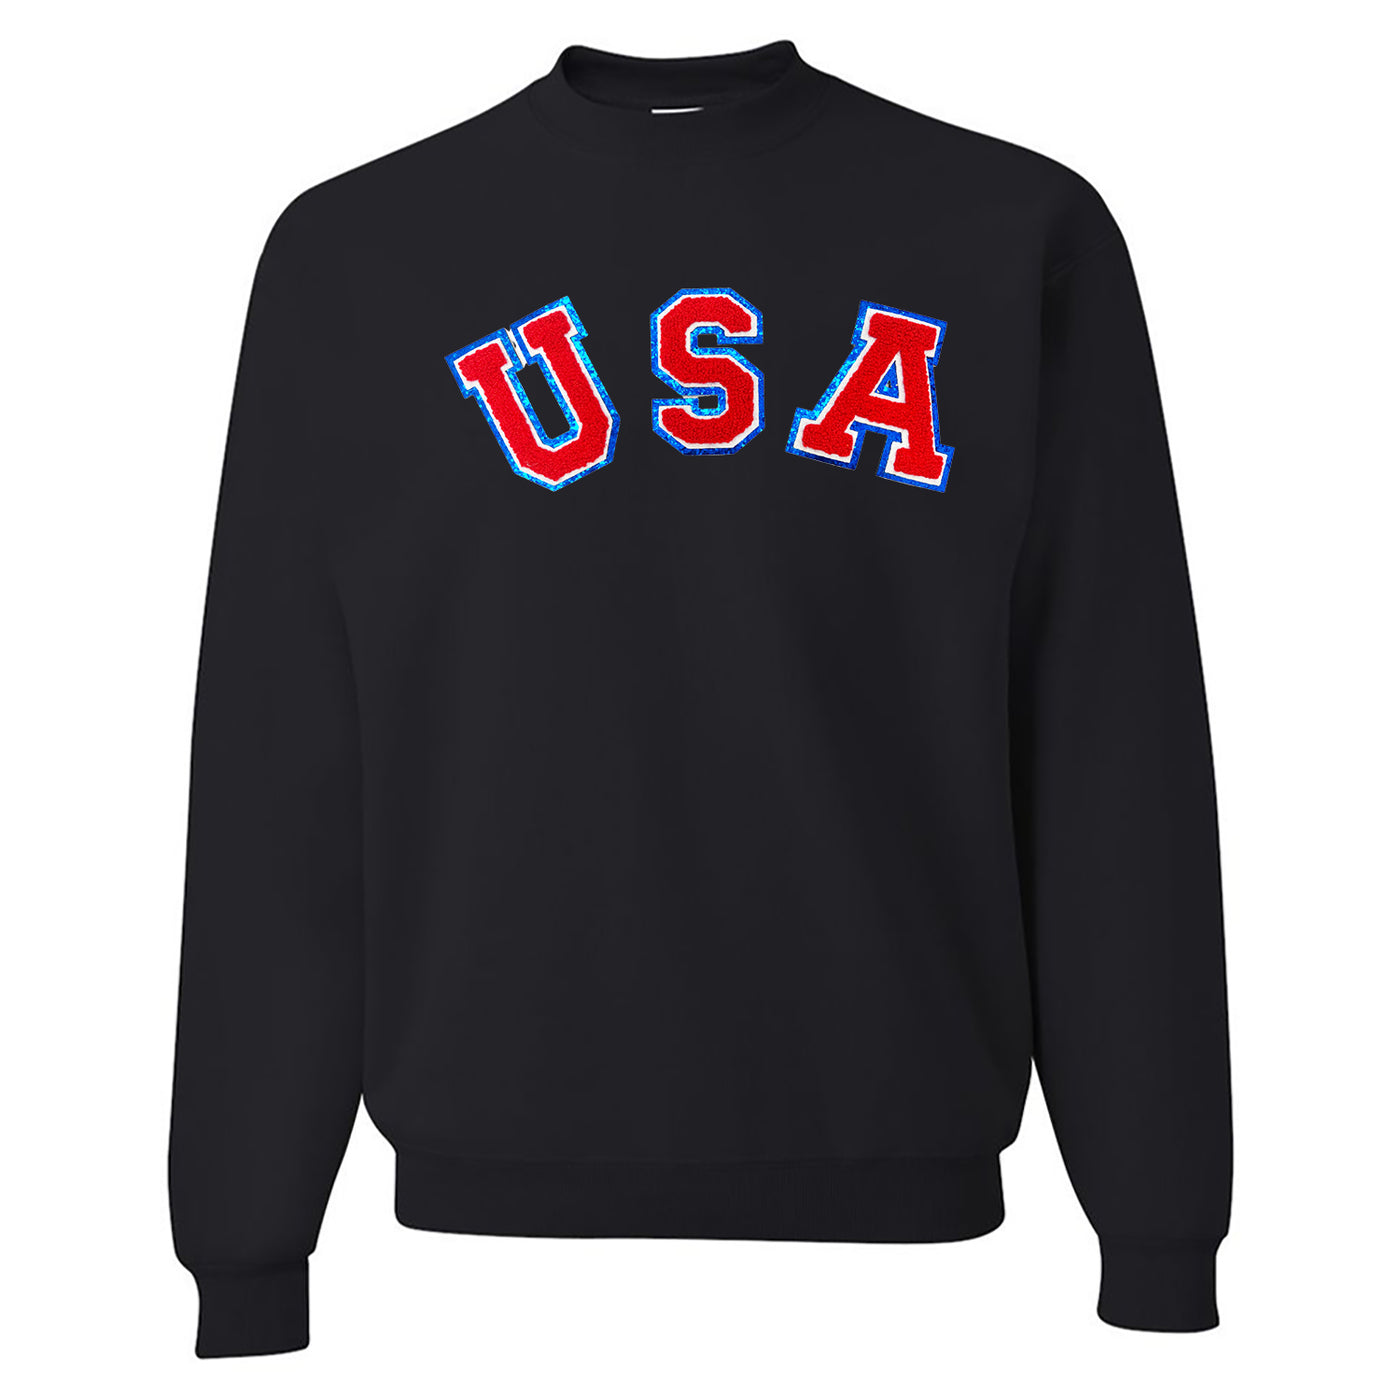 USA Letter Patch Crewneck Sweatshirt